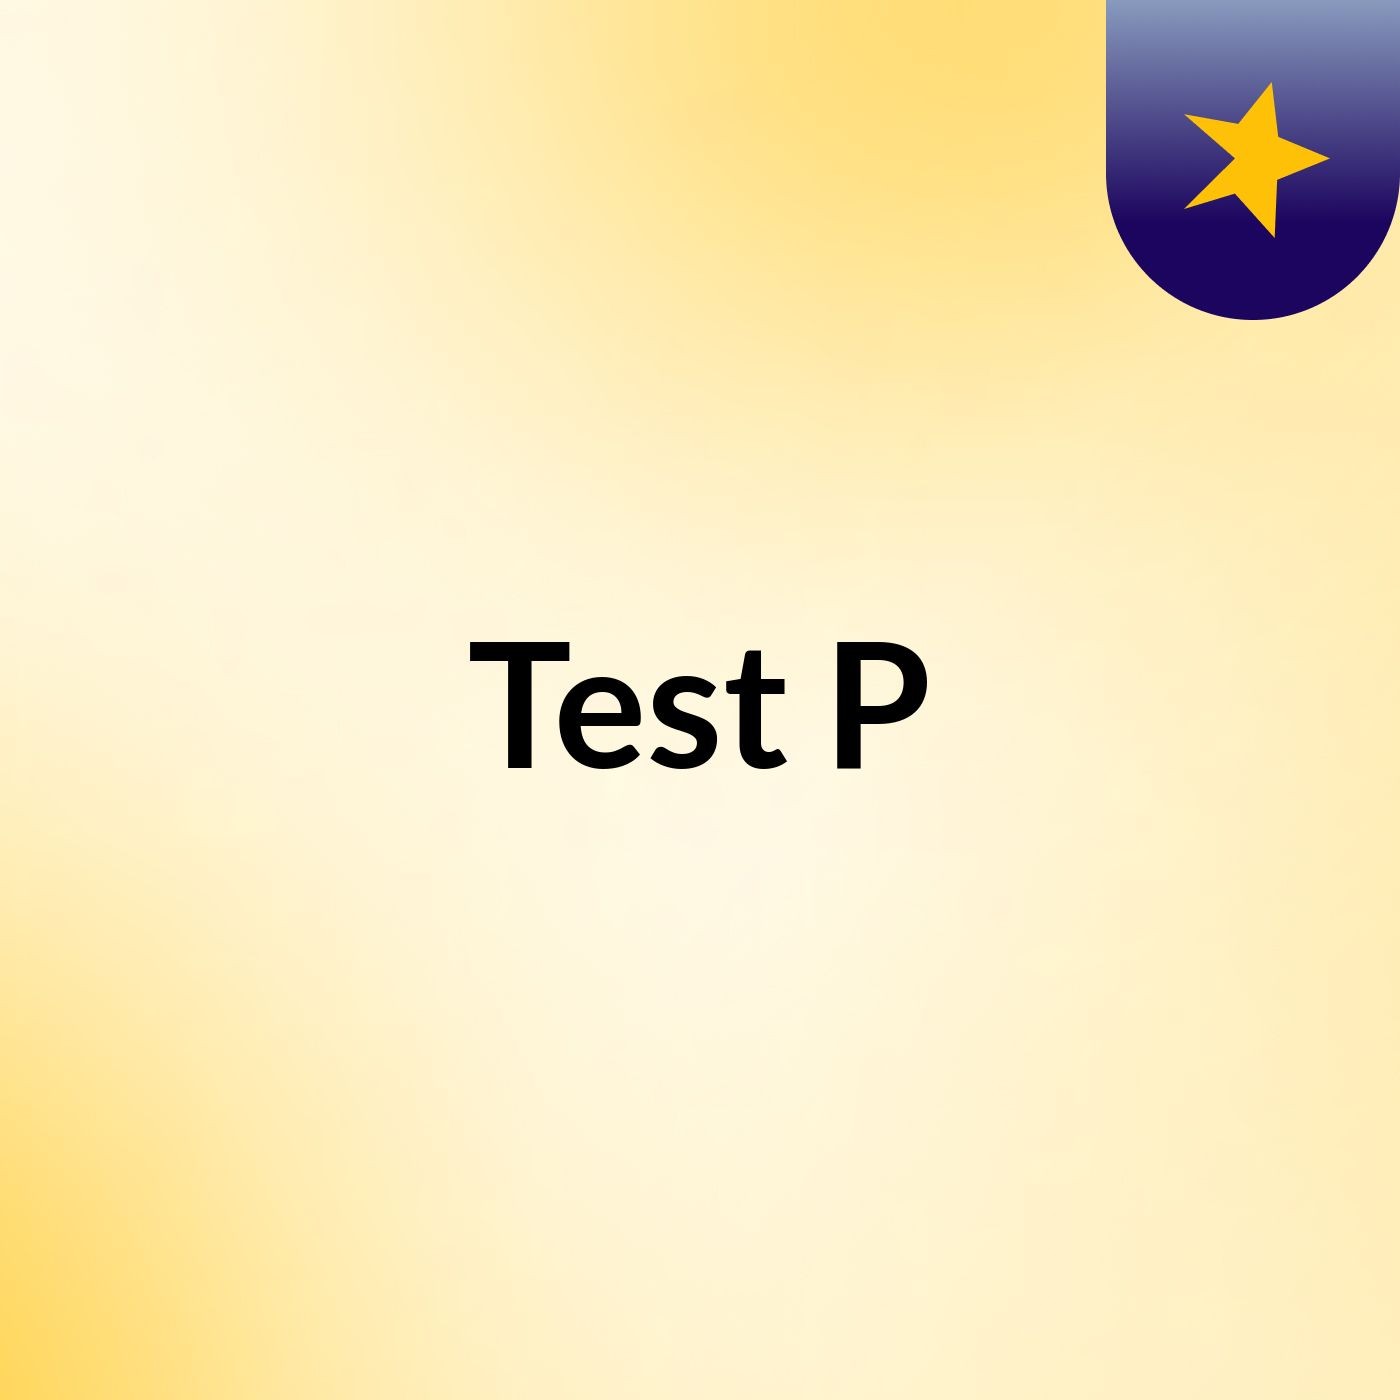 Test P